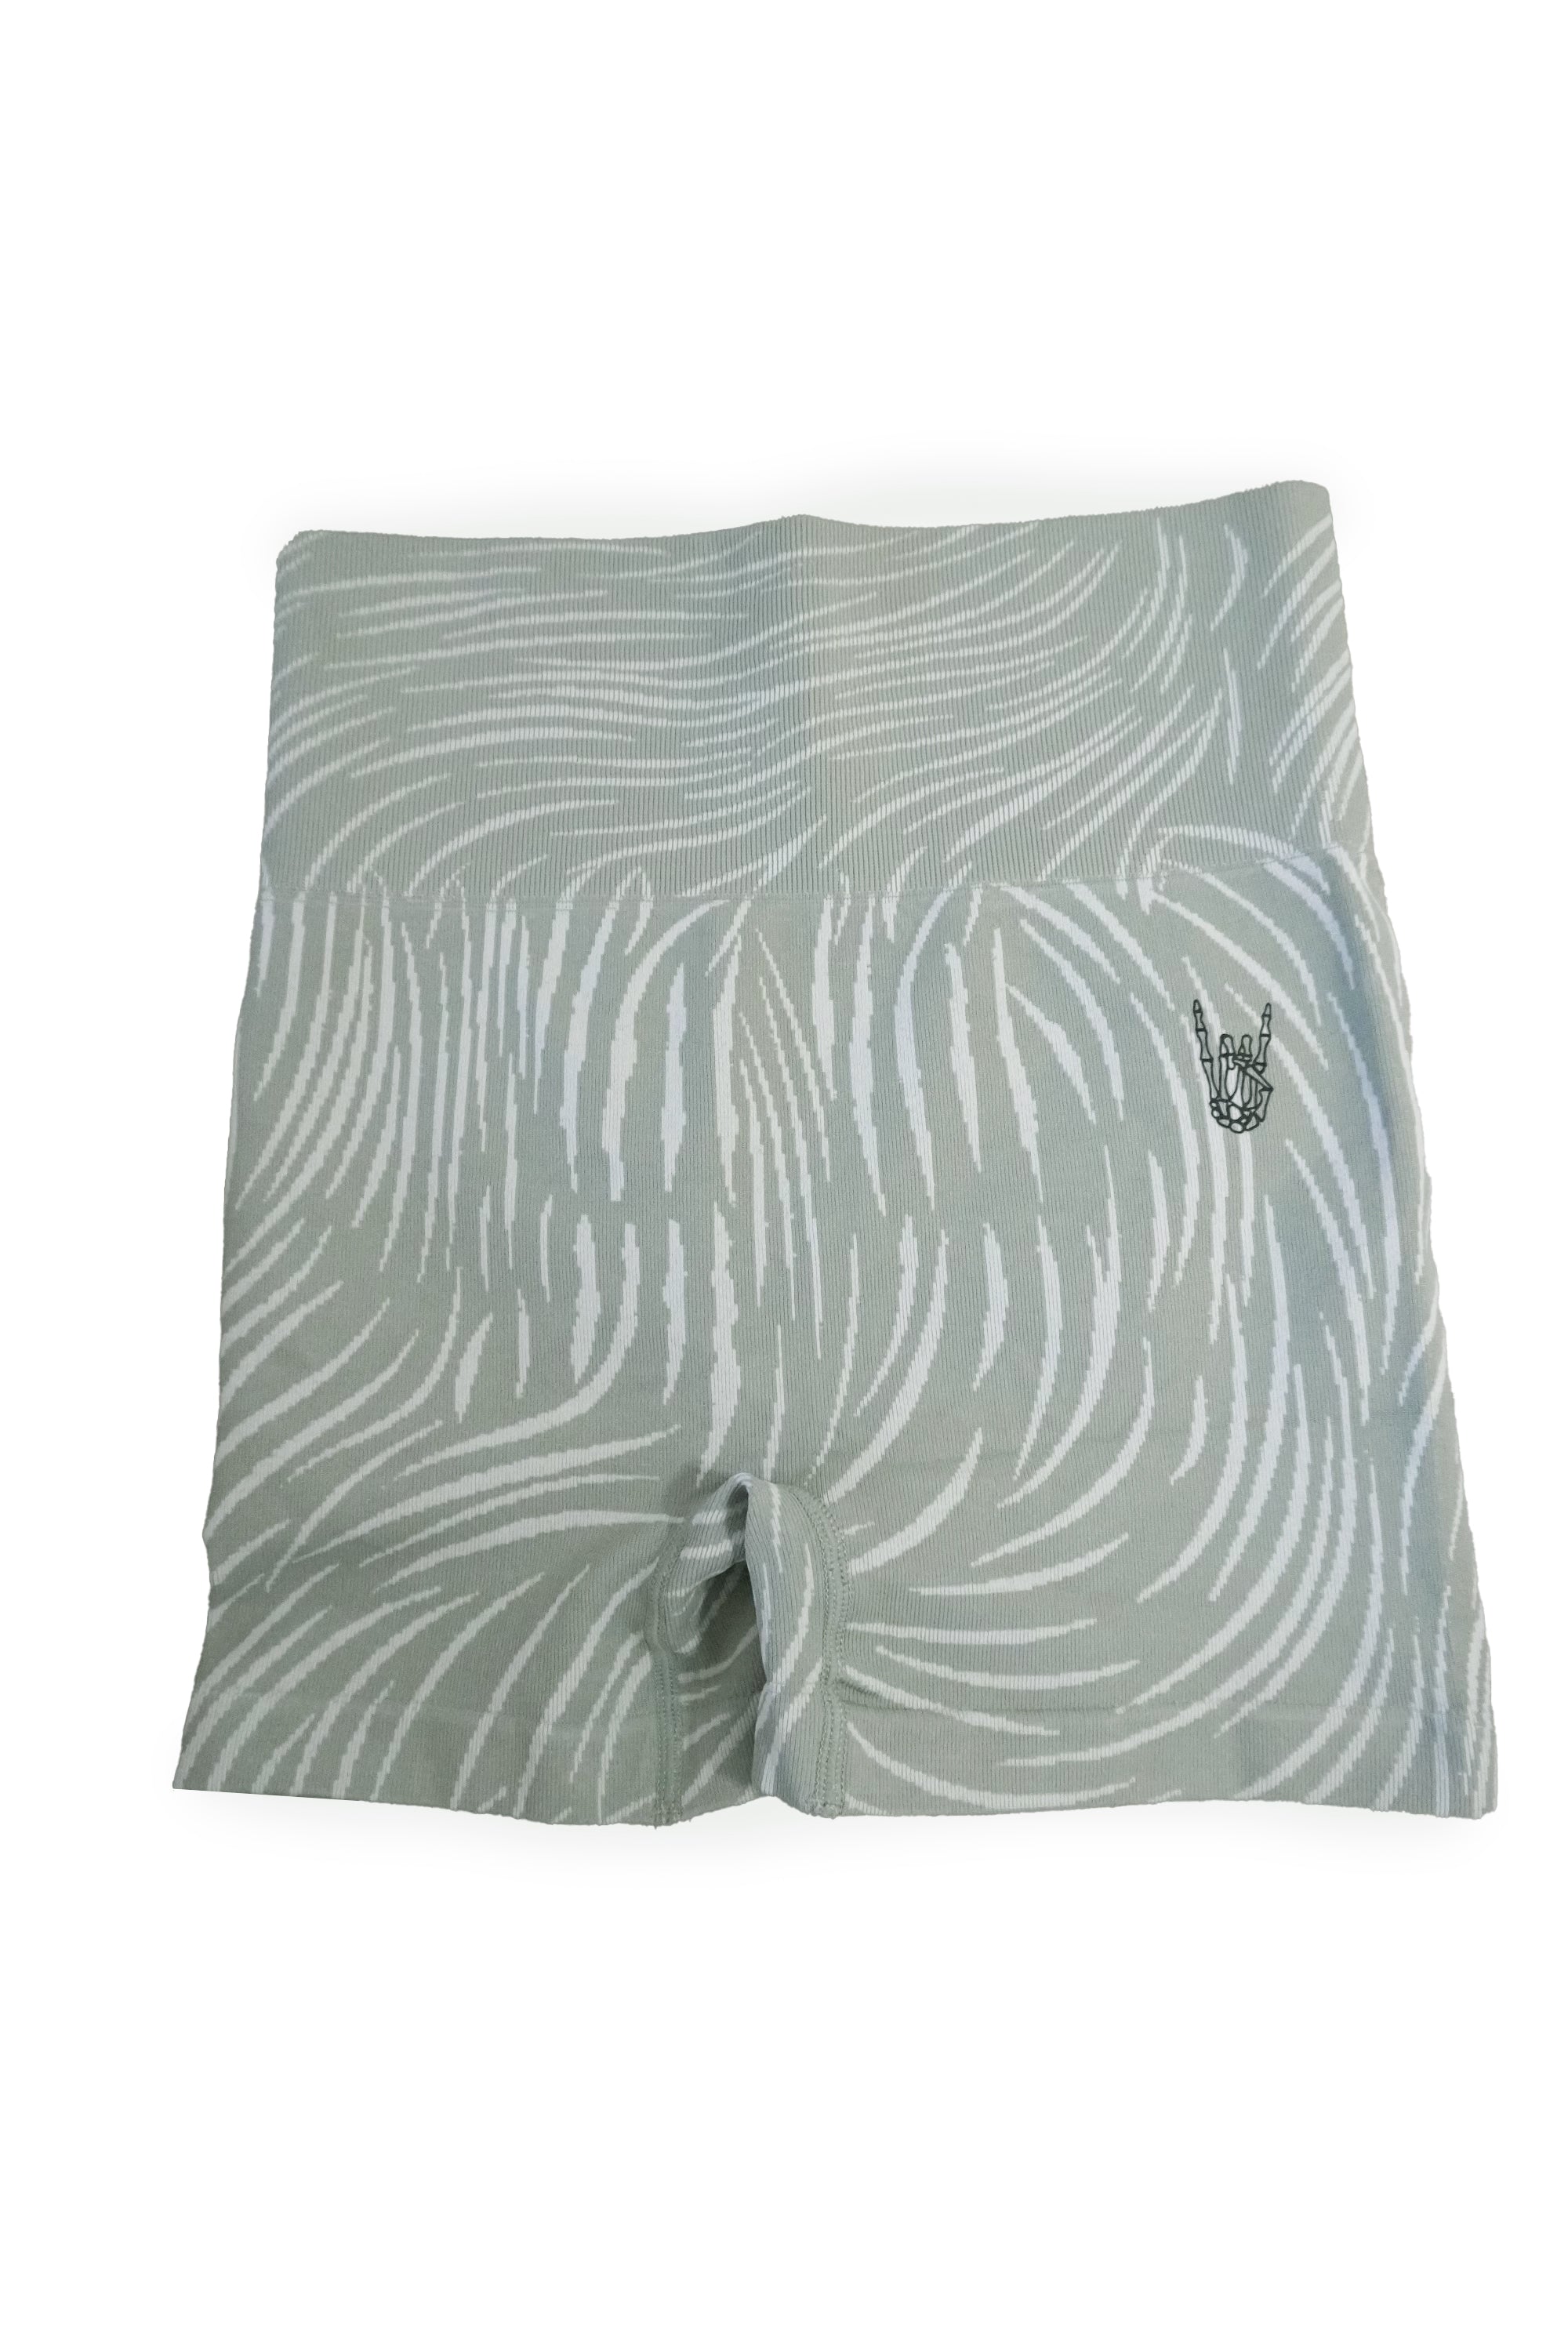 Zebra Stripe Scrunch Shorts